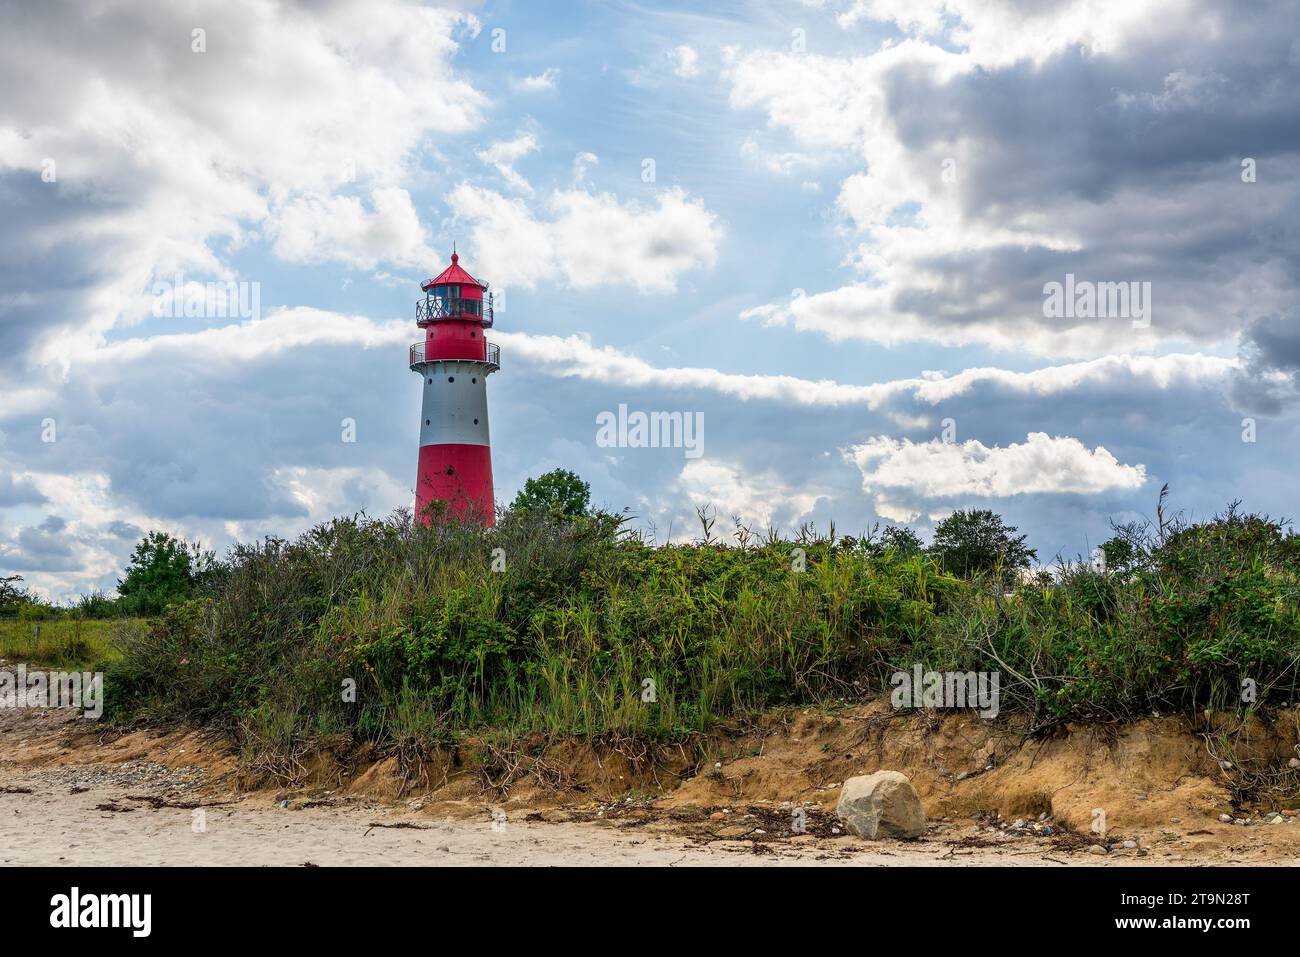 Lighthouse on the Baltic Sea with an overcast sky. Stock Photo